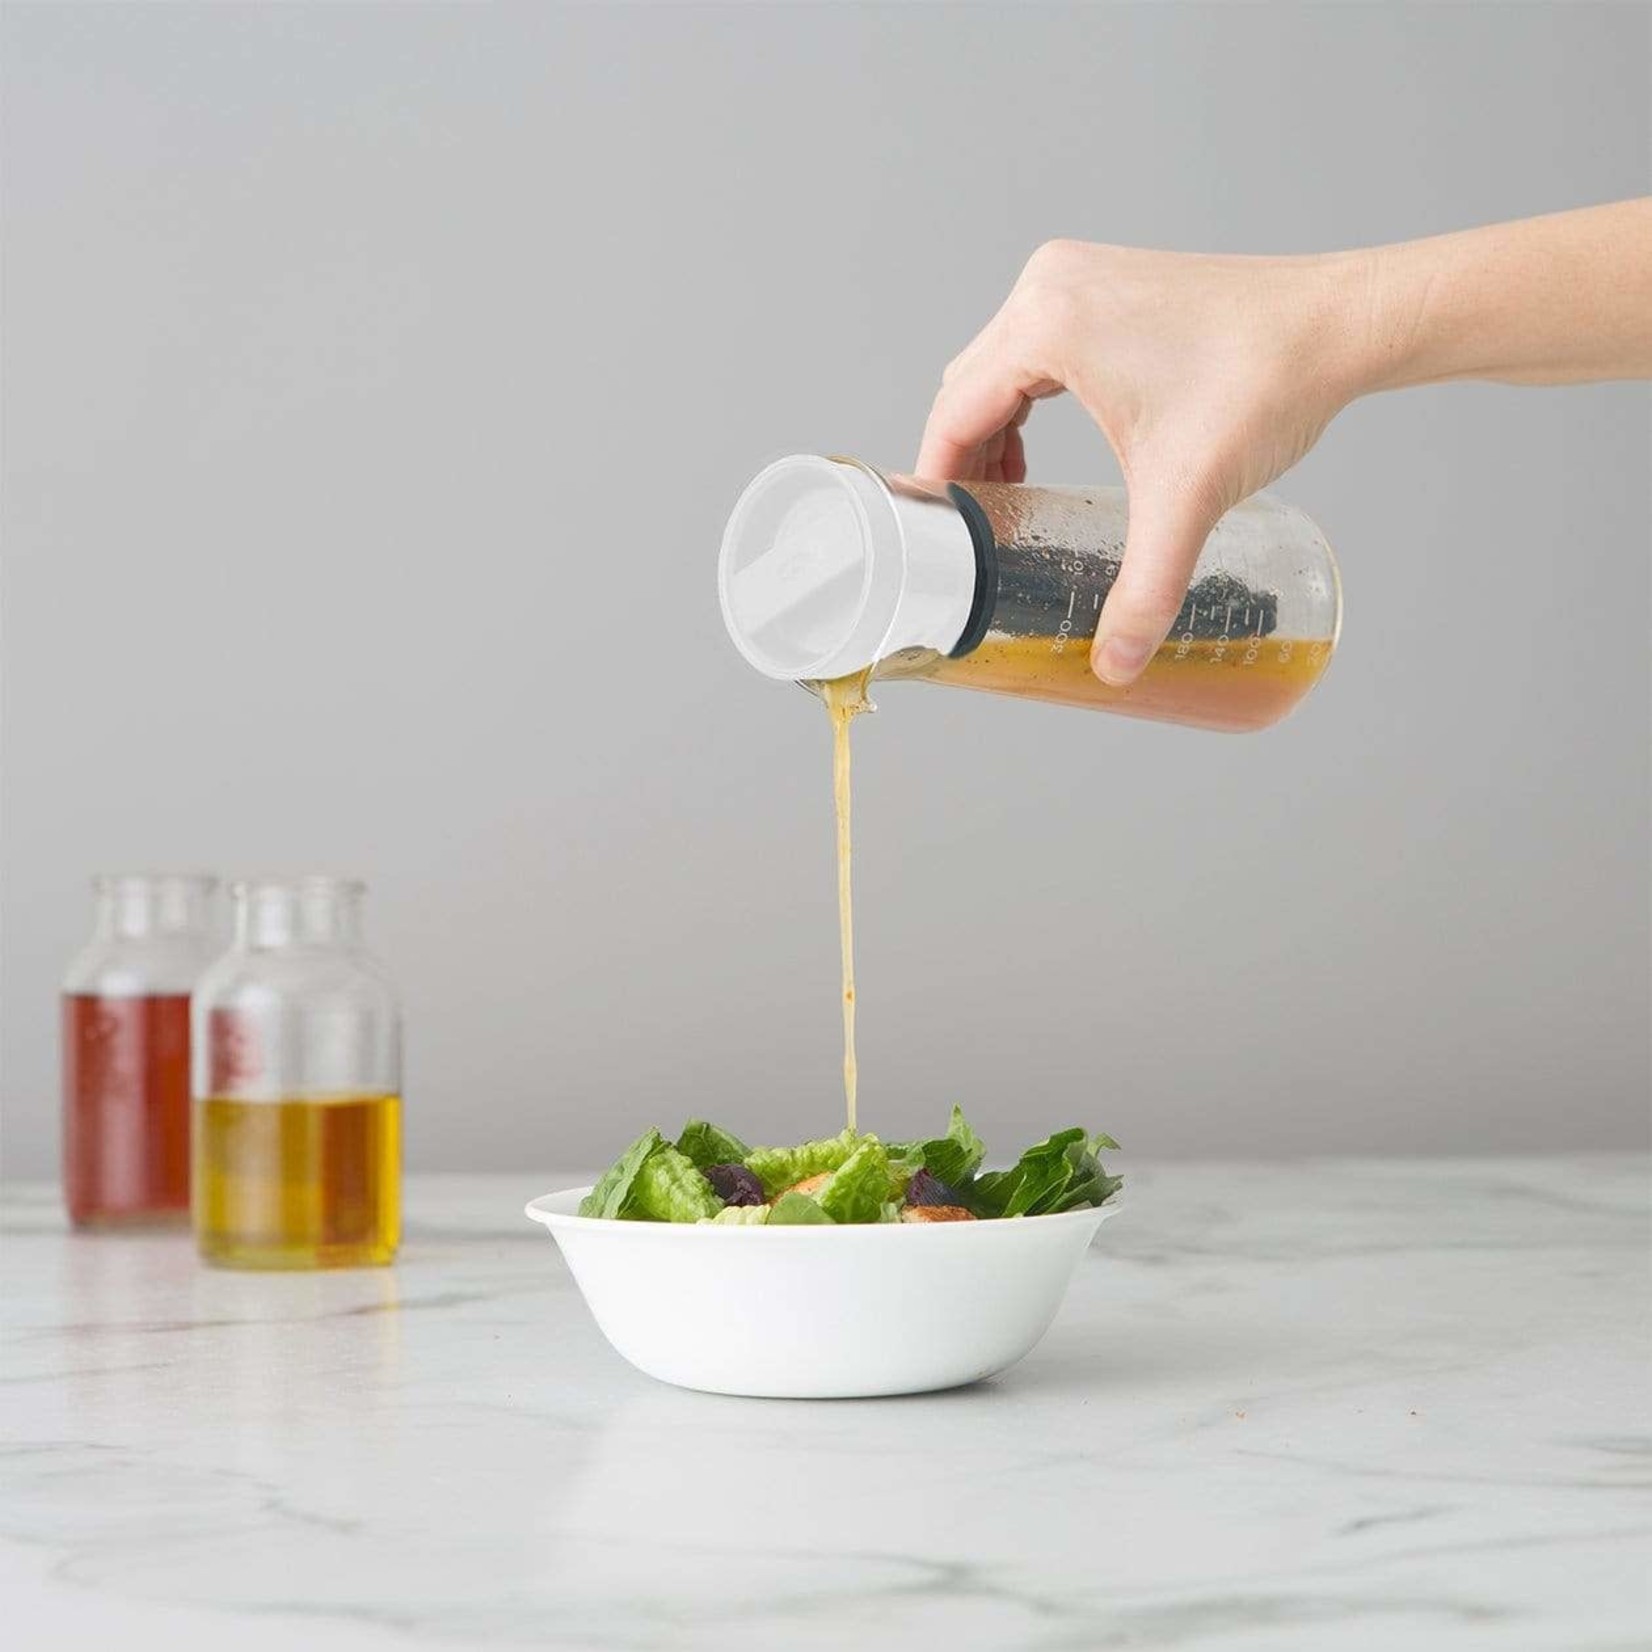  Chef'n Emulstir 2.0, Salad Dressing Mixer: Salad